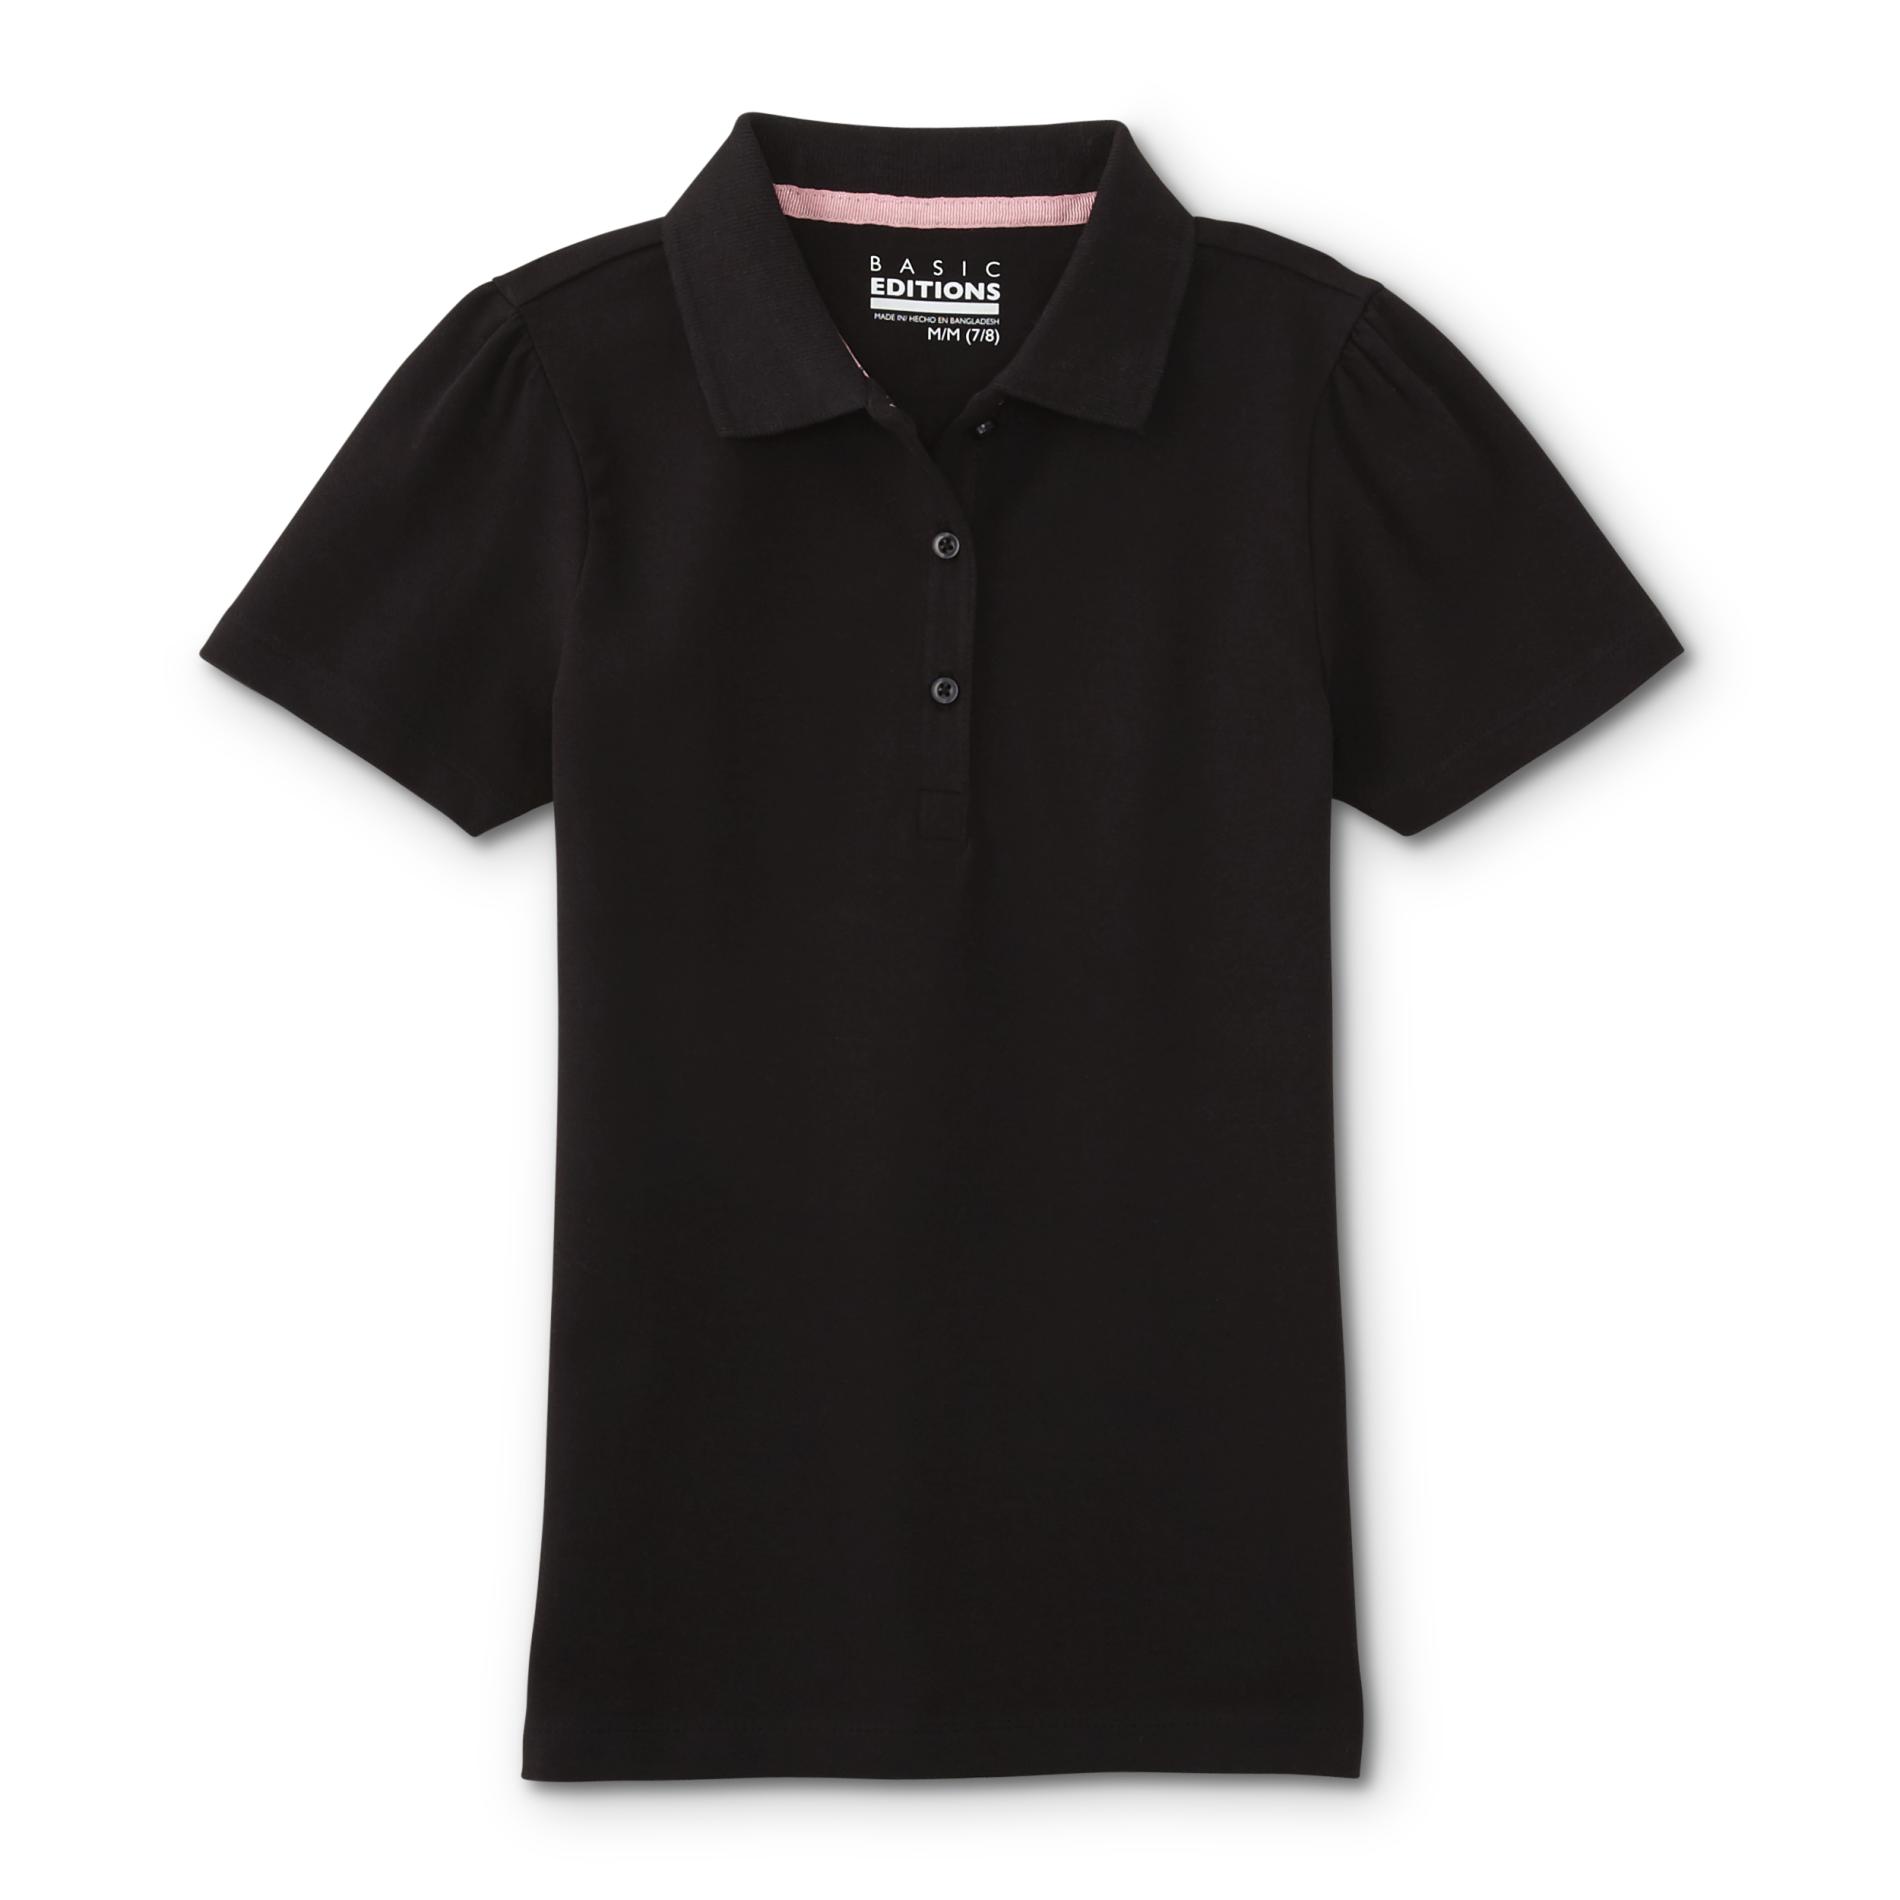 Basic Editions Girls' Polo Shirt